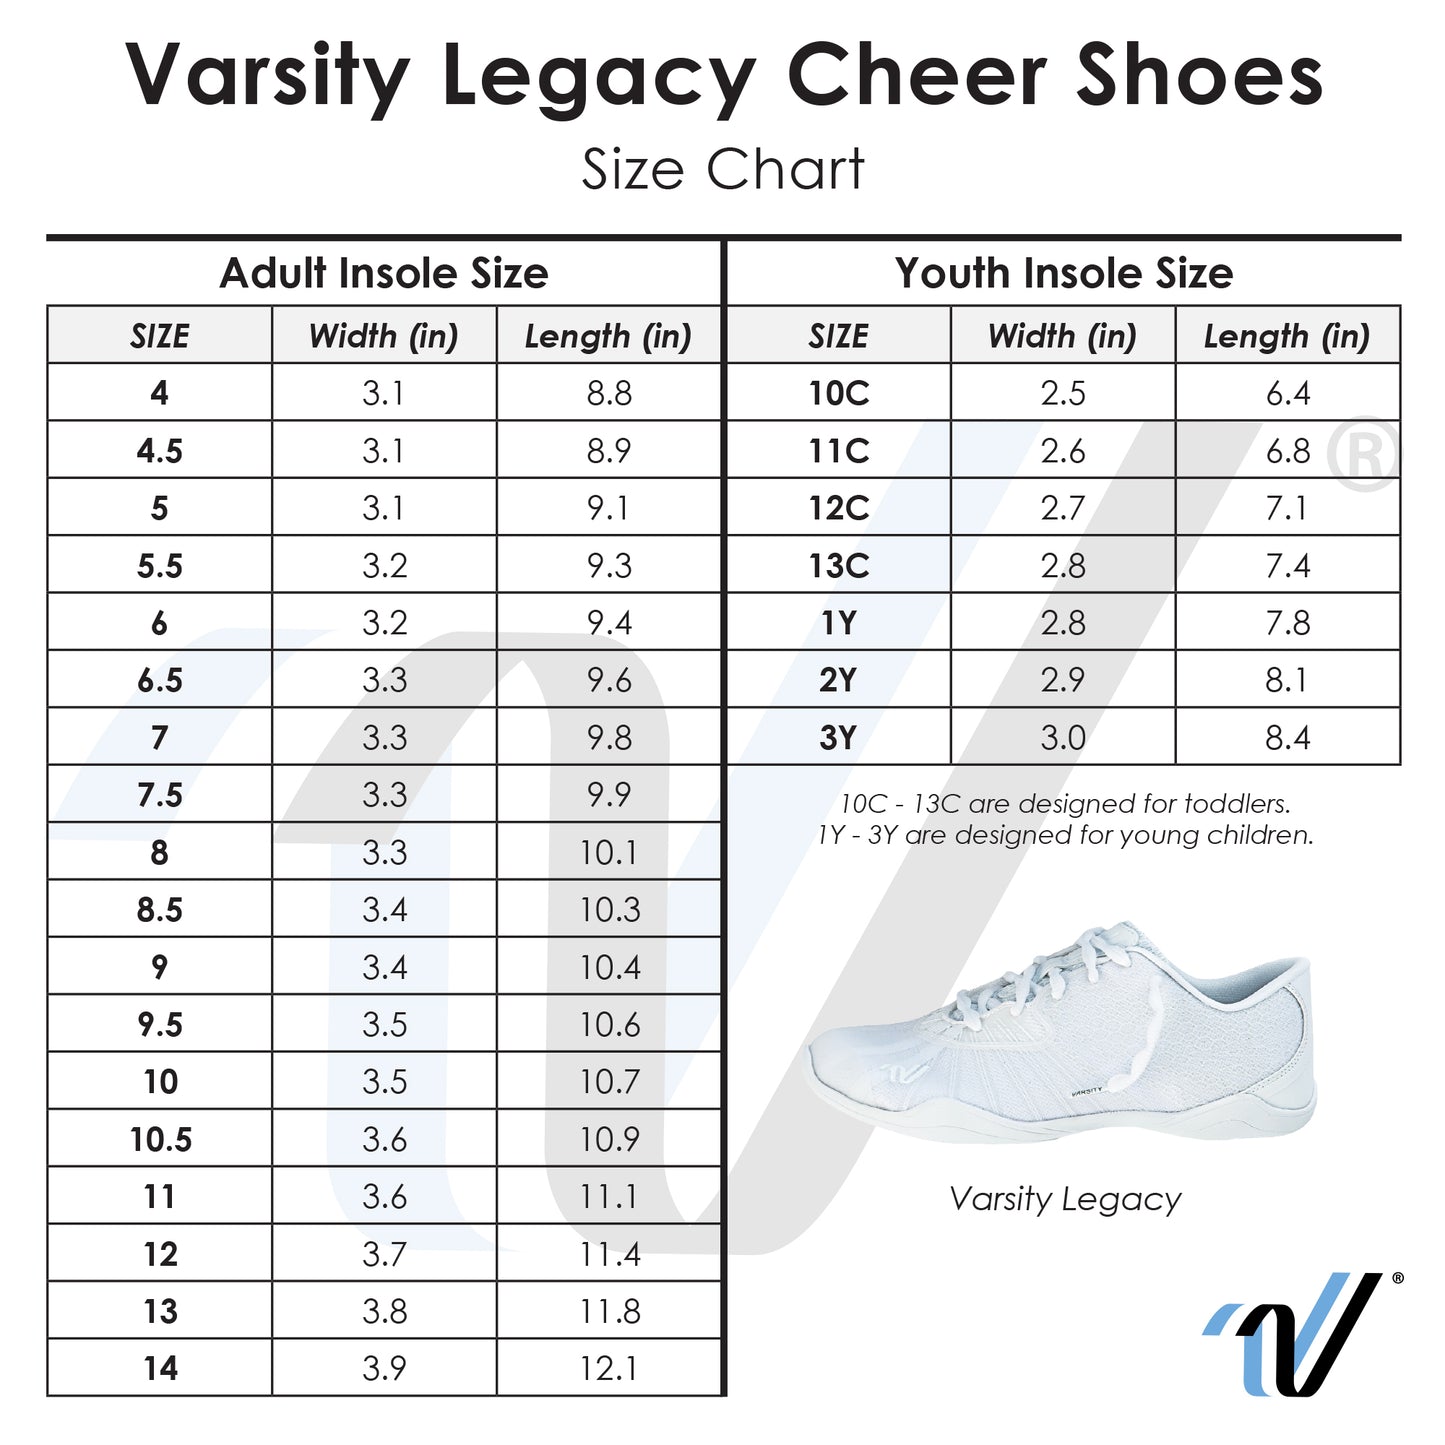 Varsity Legacy Cheer Shoes